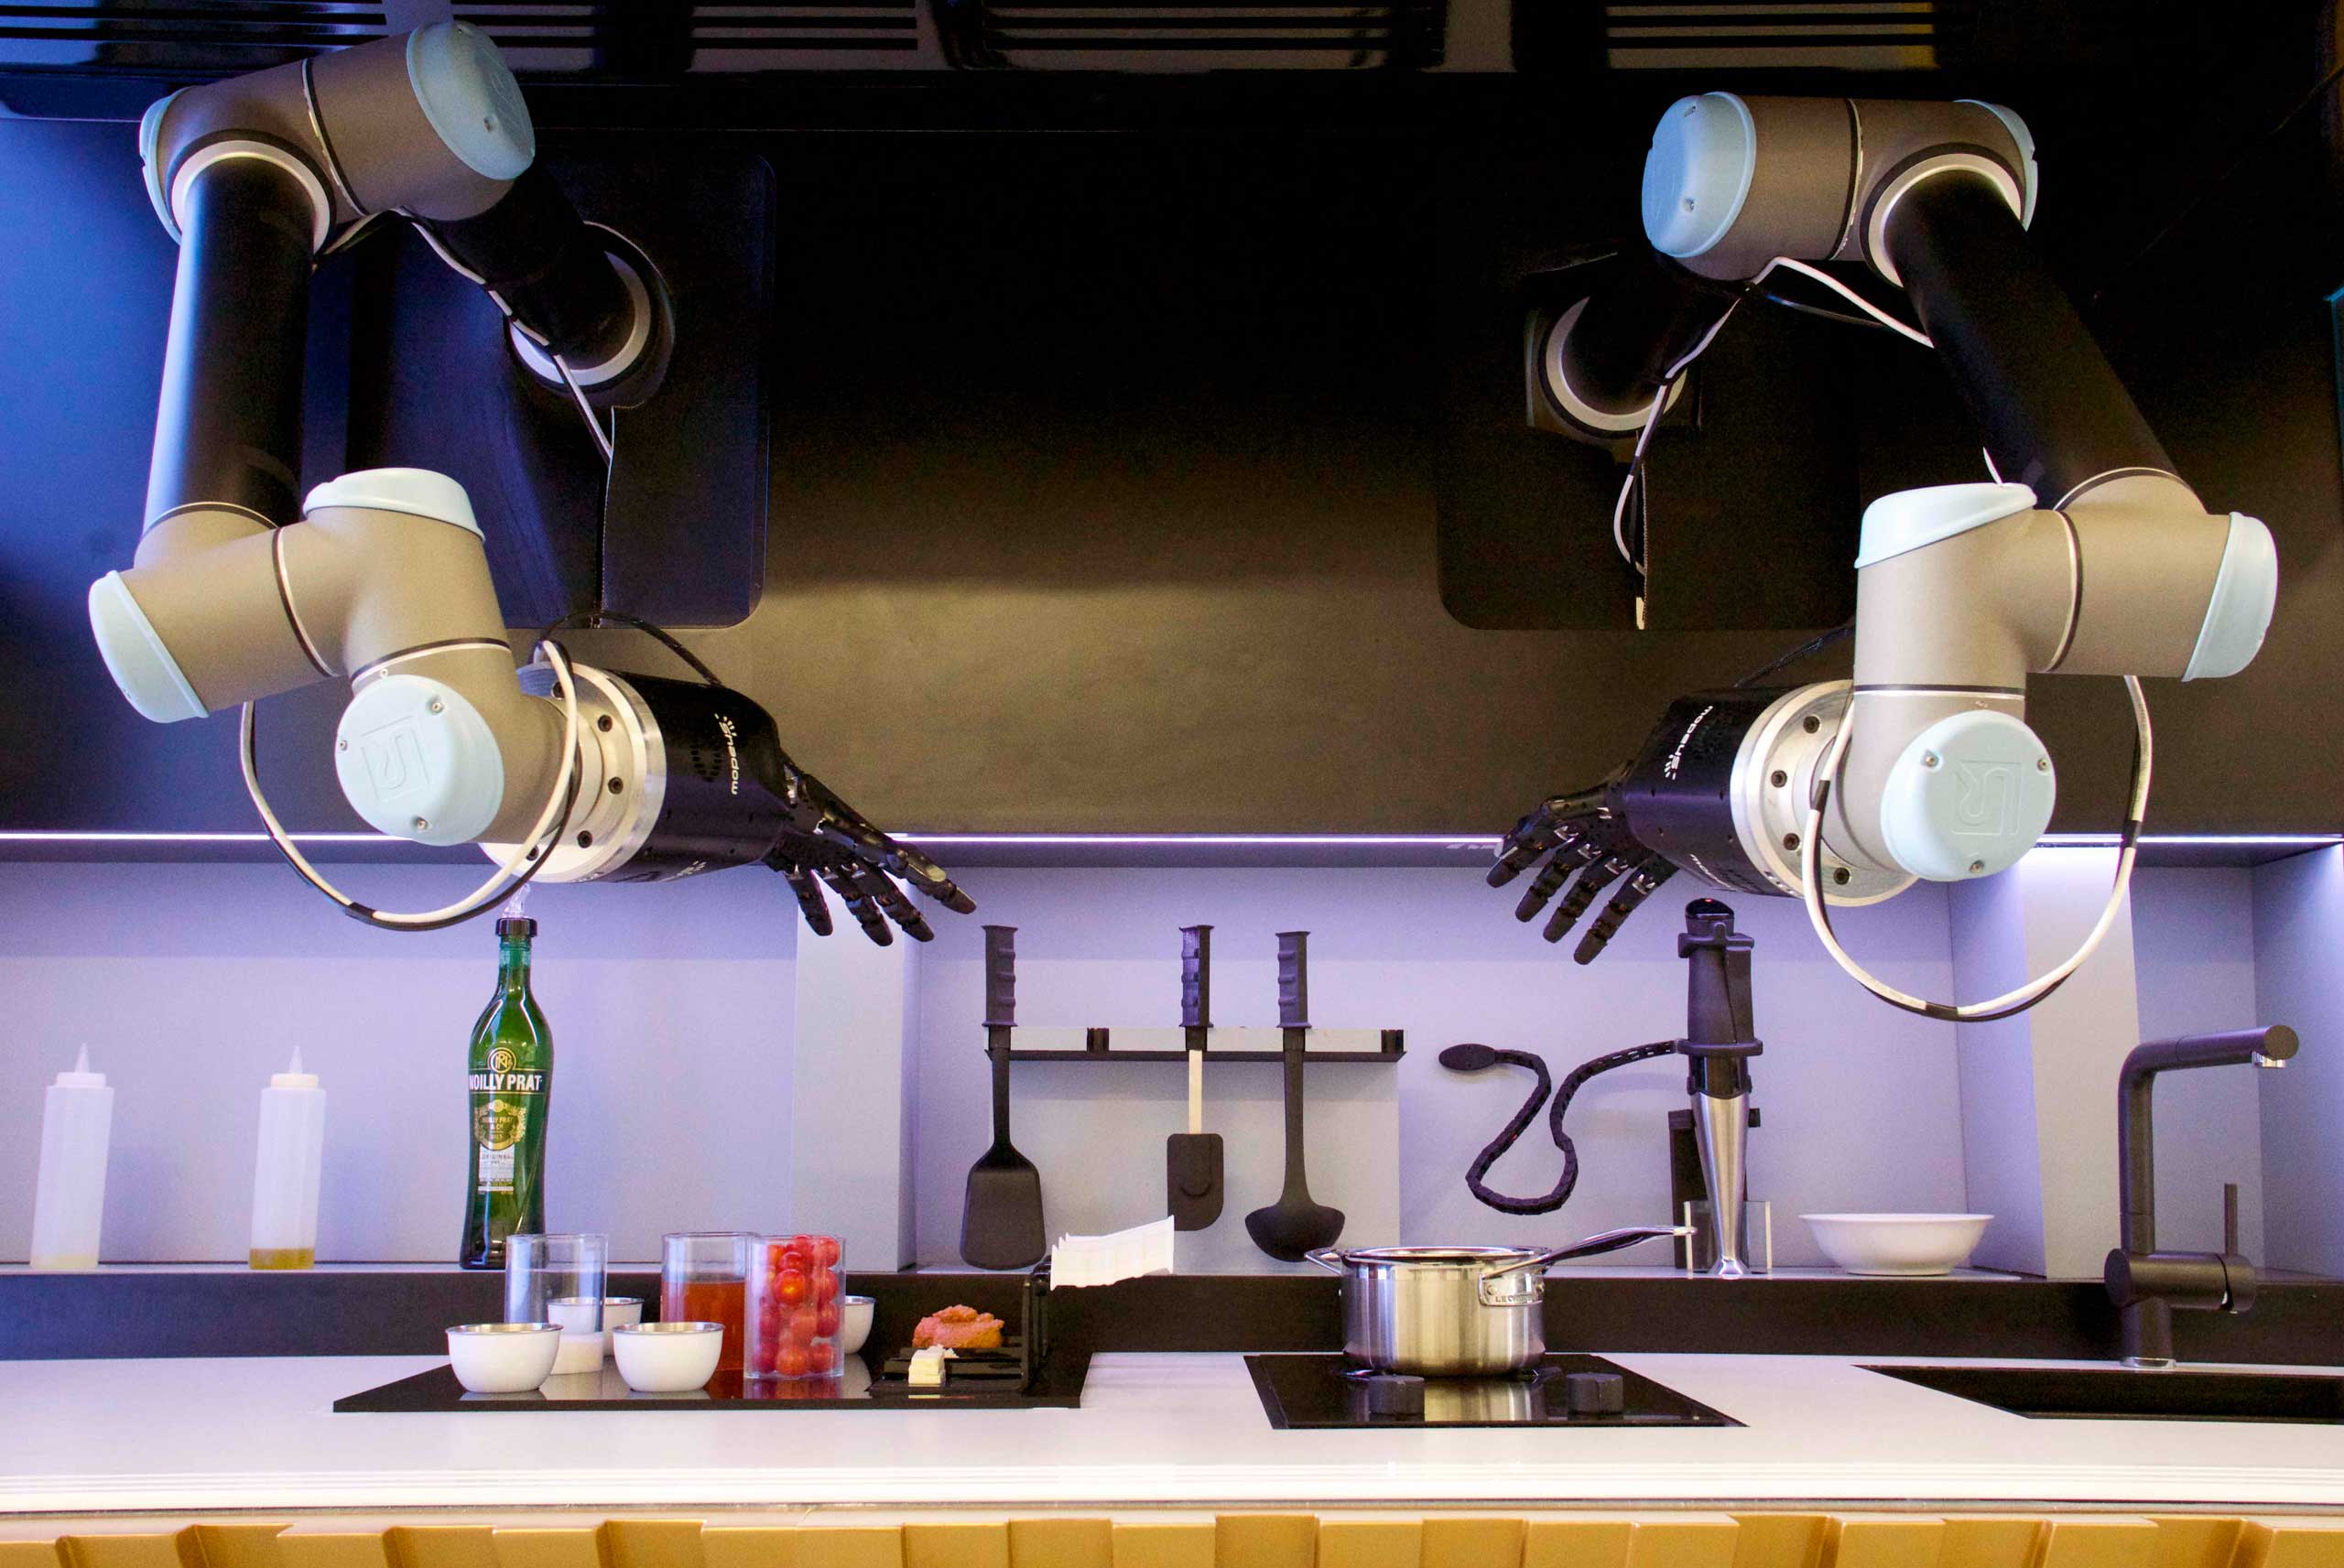 Moley-Robotics-Automated-kitchen_LR